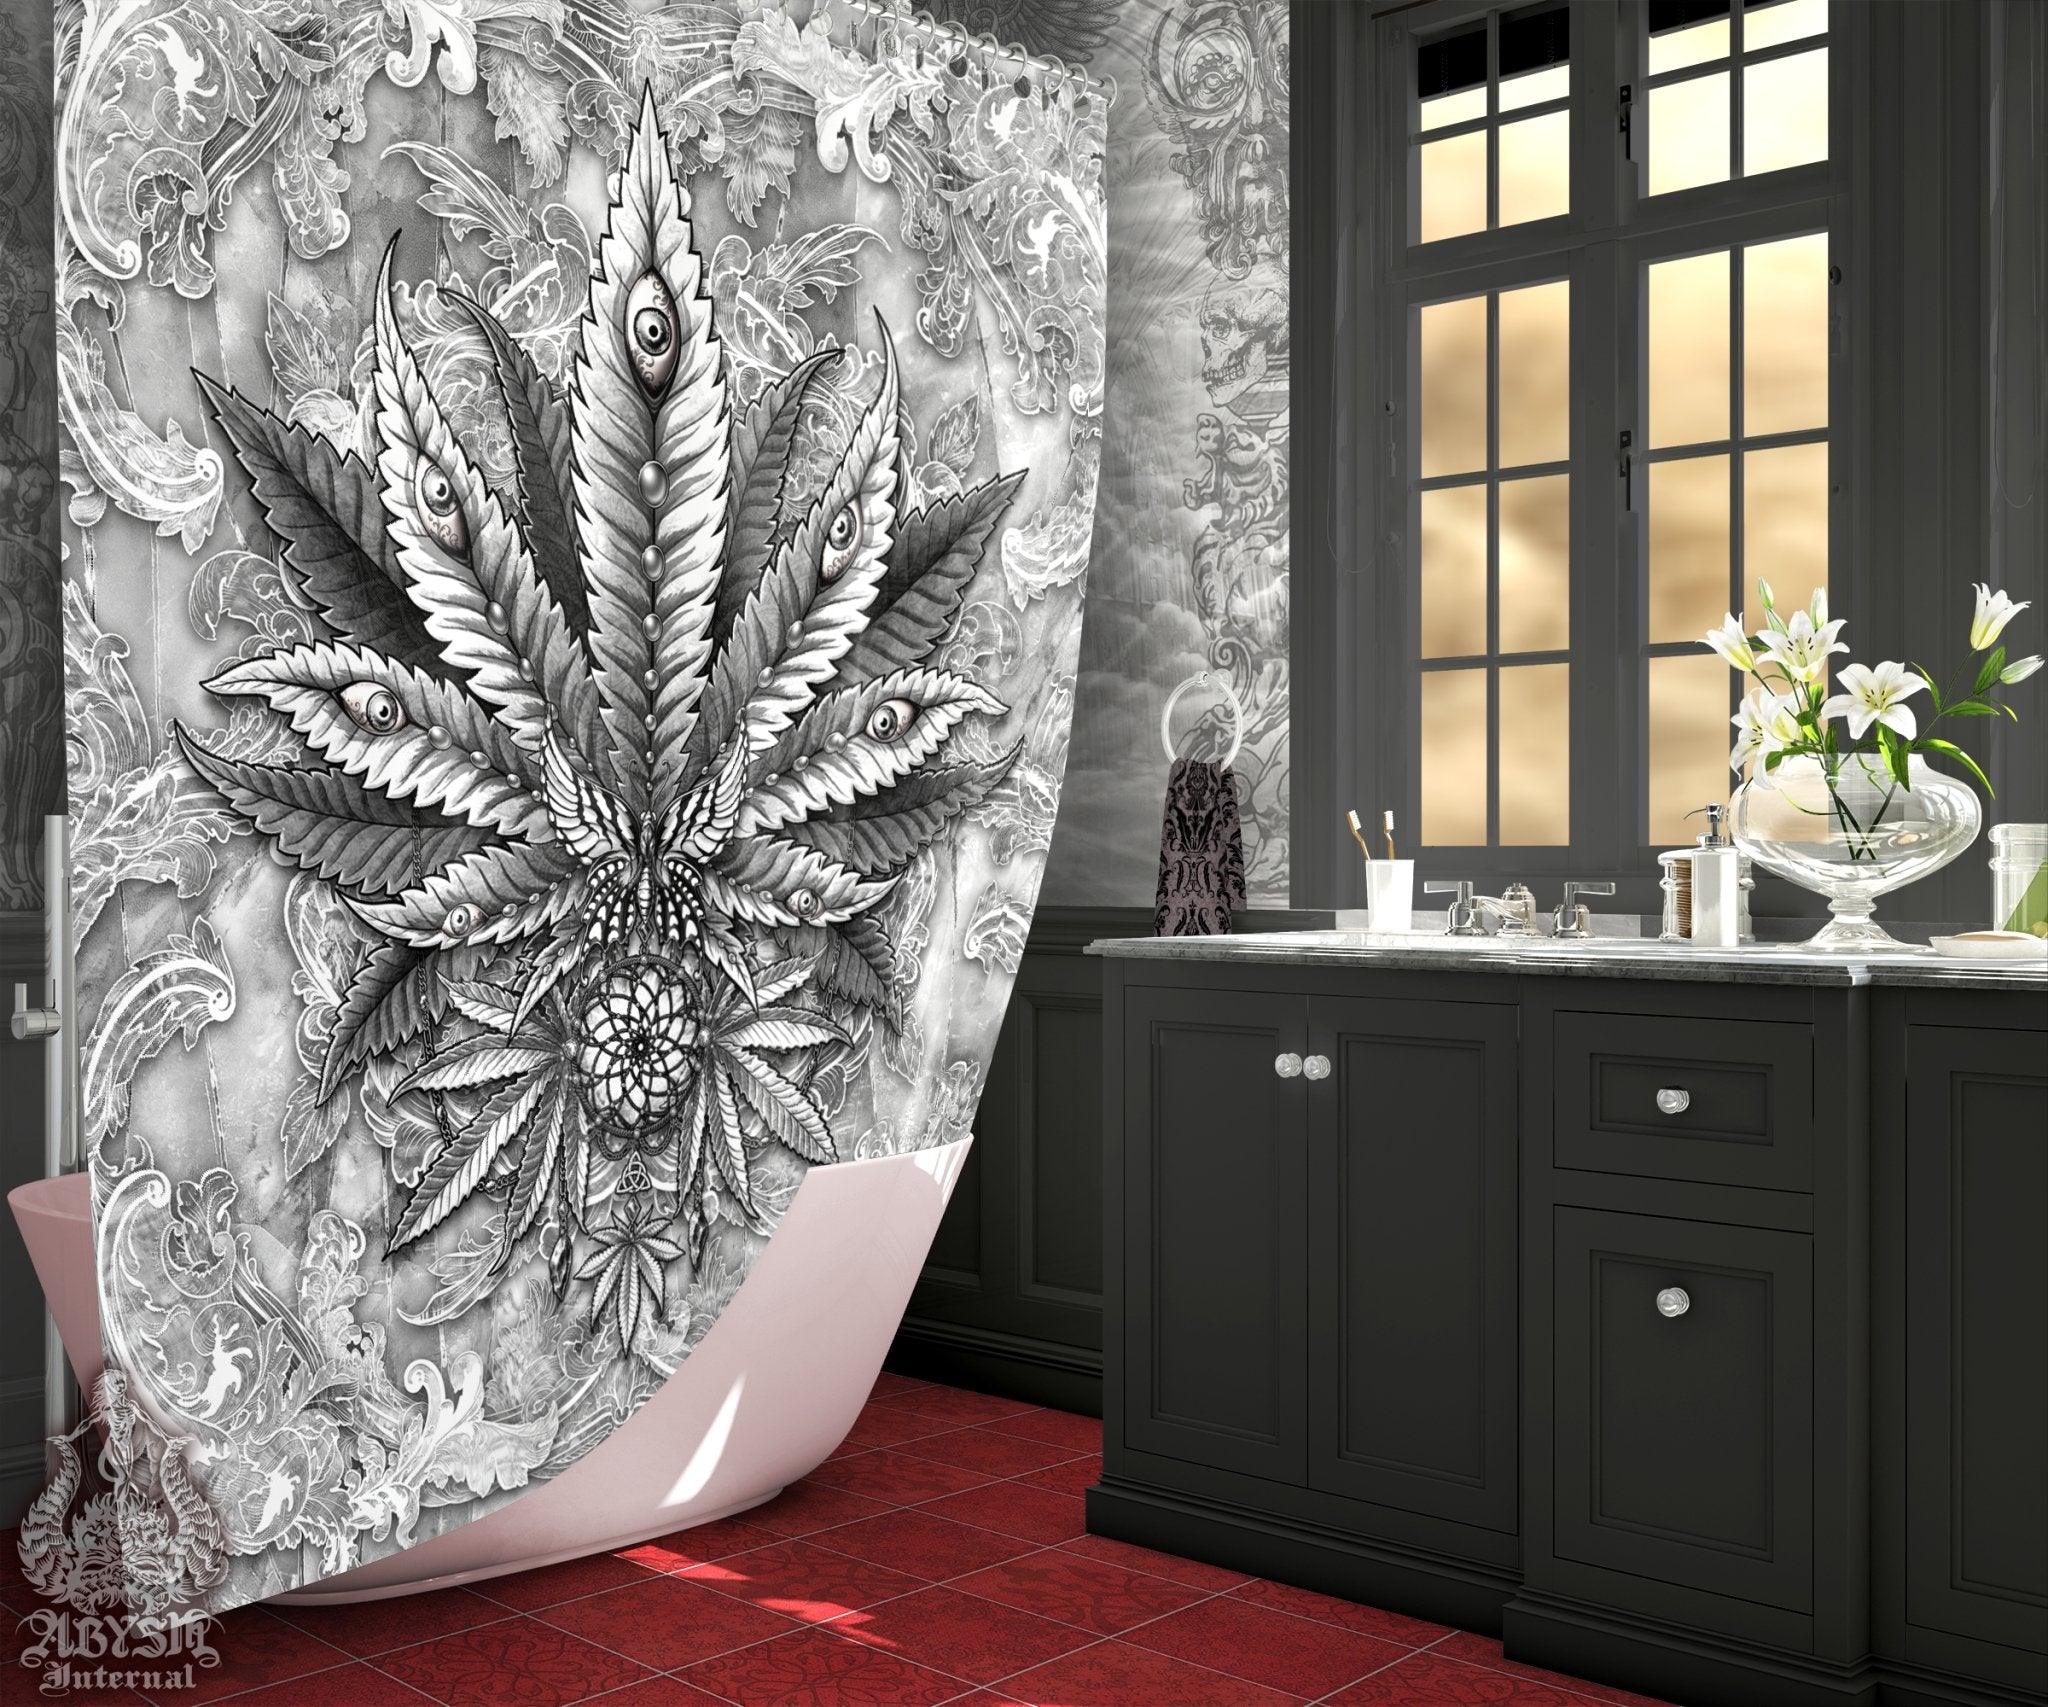 Weed Shower Curtain, Gothic Bathroom Decor, Indie Cannabis Print, Alternative 420 Home Art - Marijuana, Black and White Goth, Stone - Abysm Internal